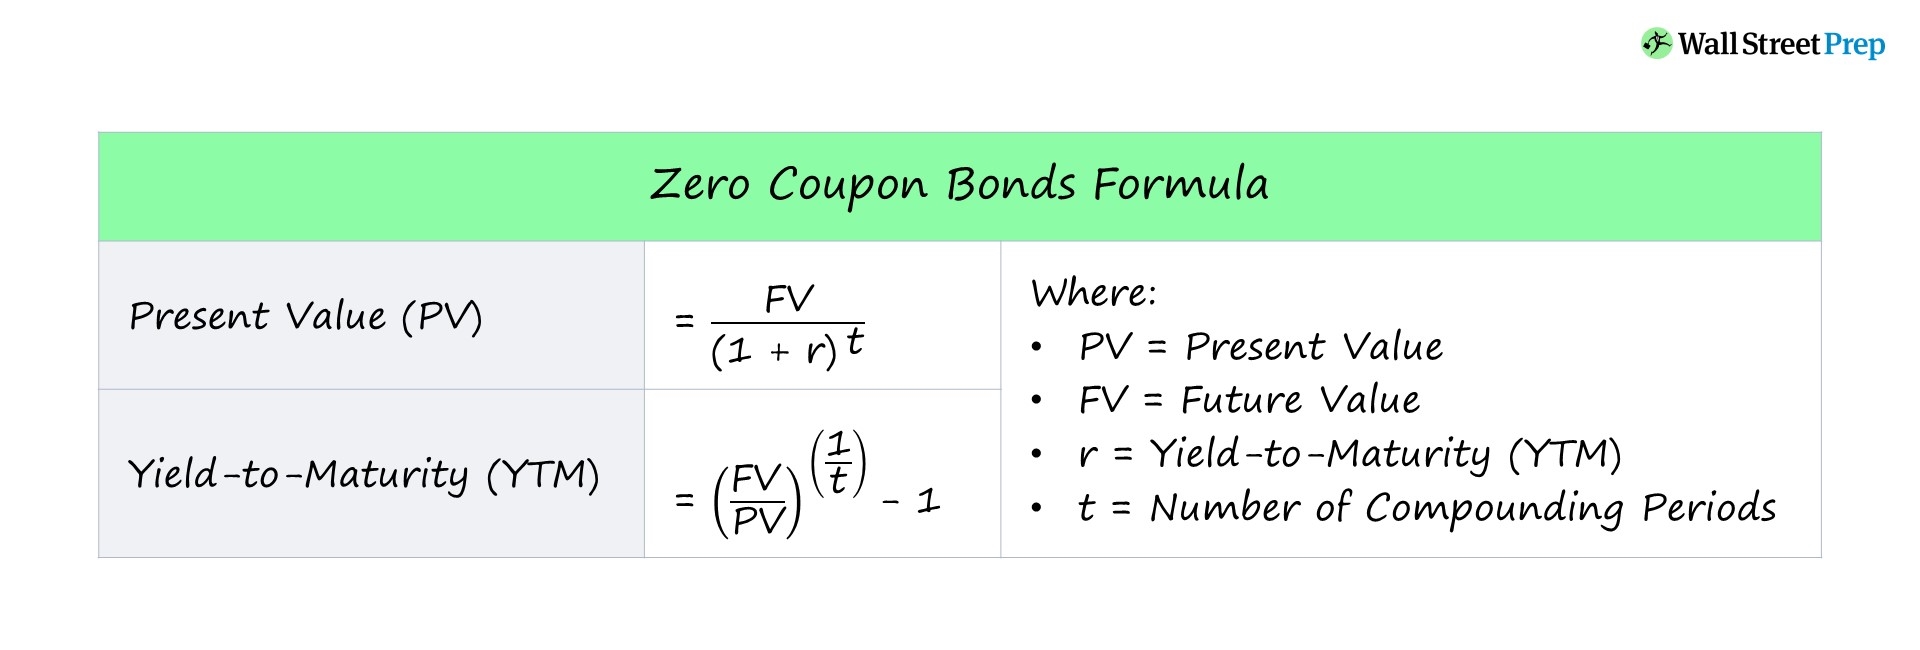 Bono cupón cero | Fórmula + Calculadora